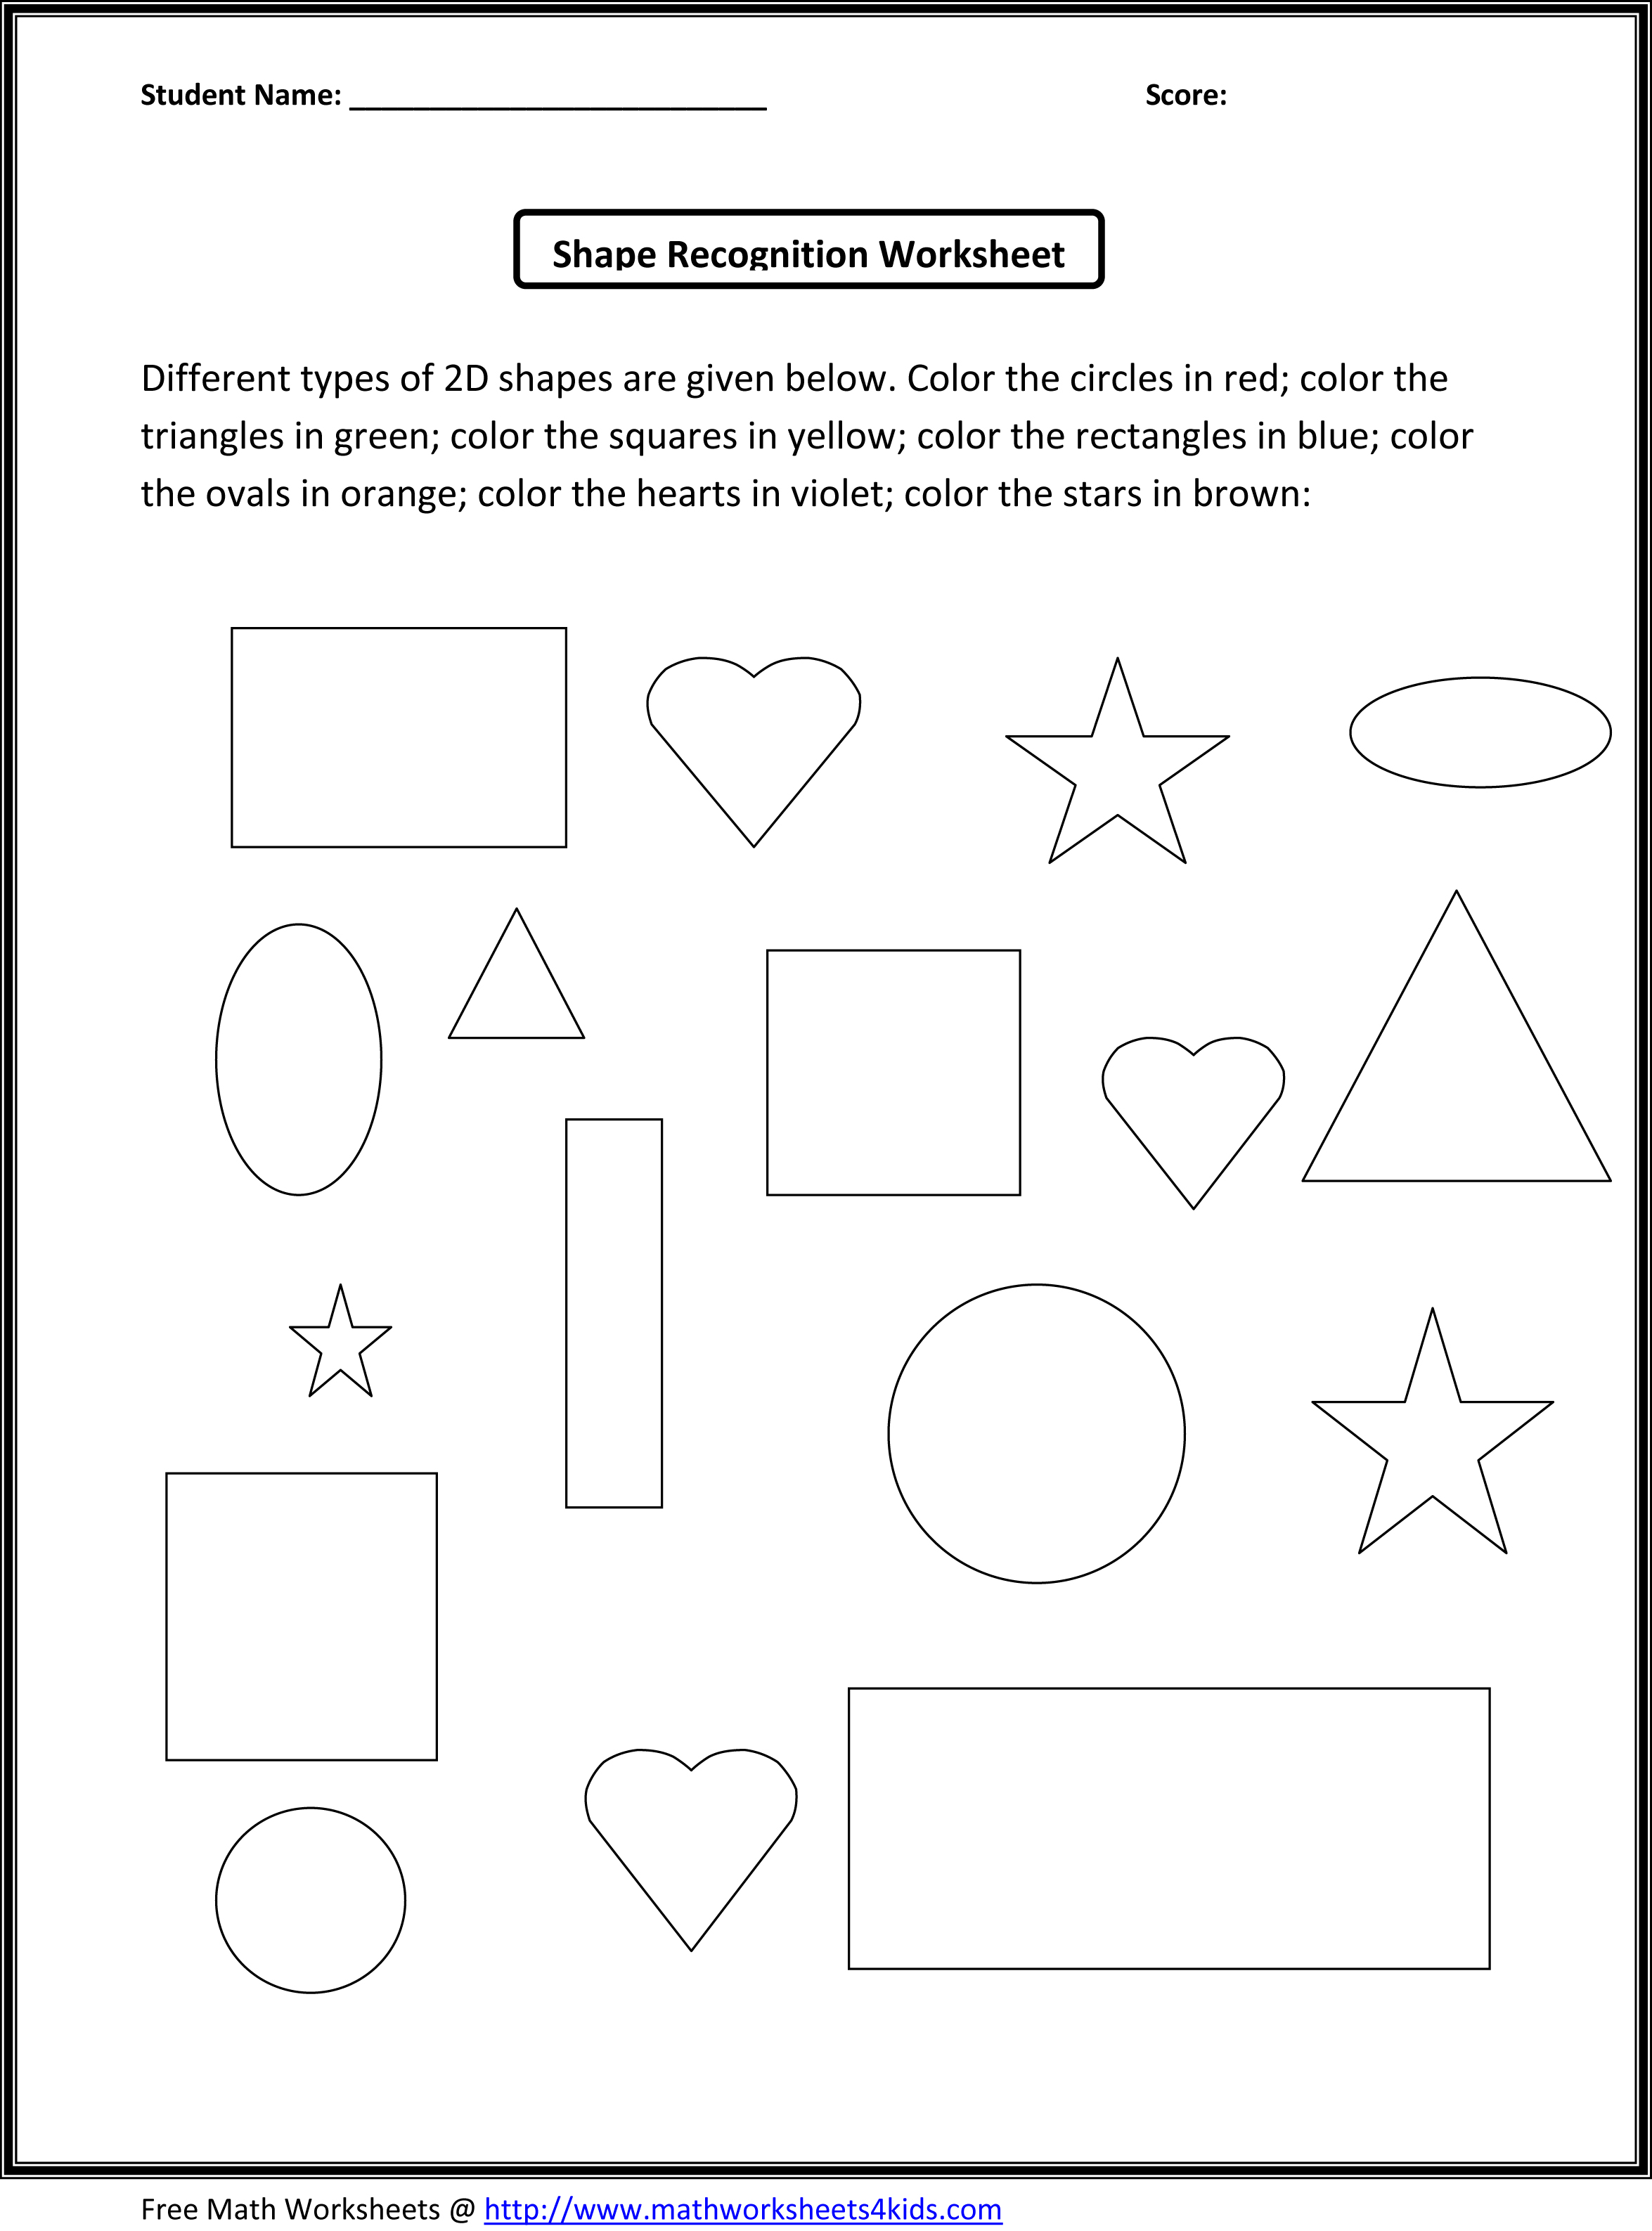  kindergarten worksheets | Preschool worksheets | Printables for kids | #